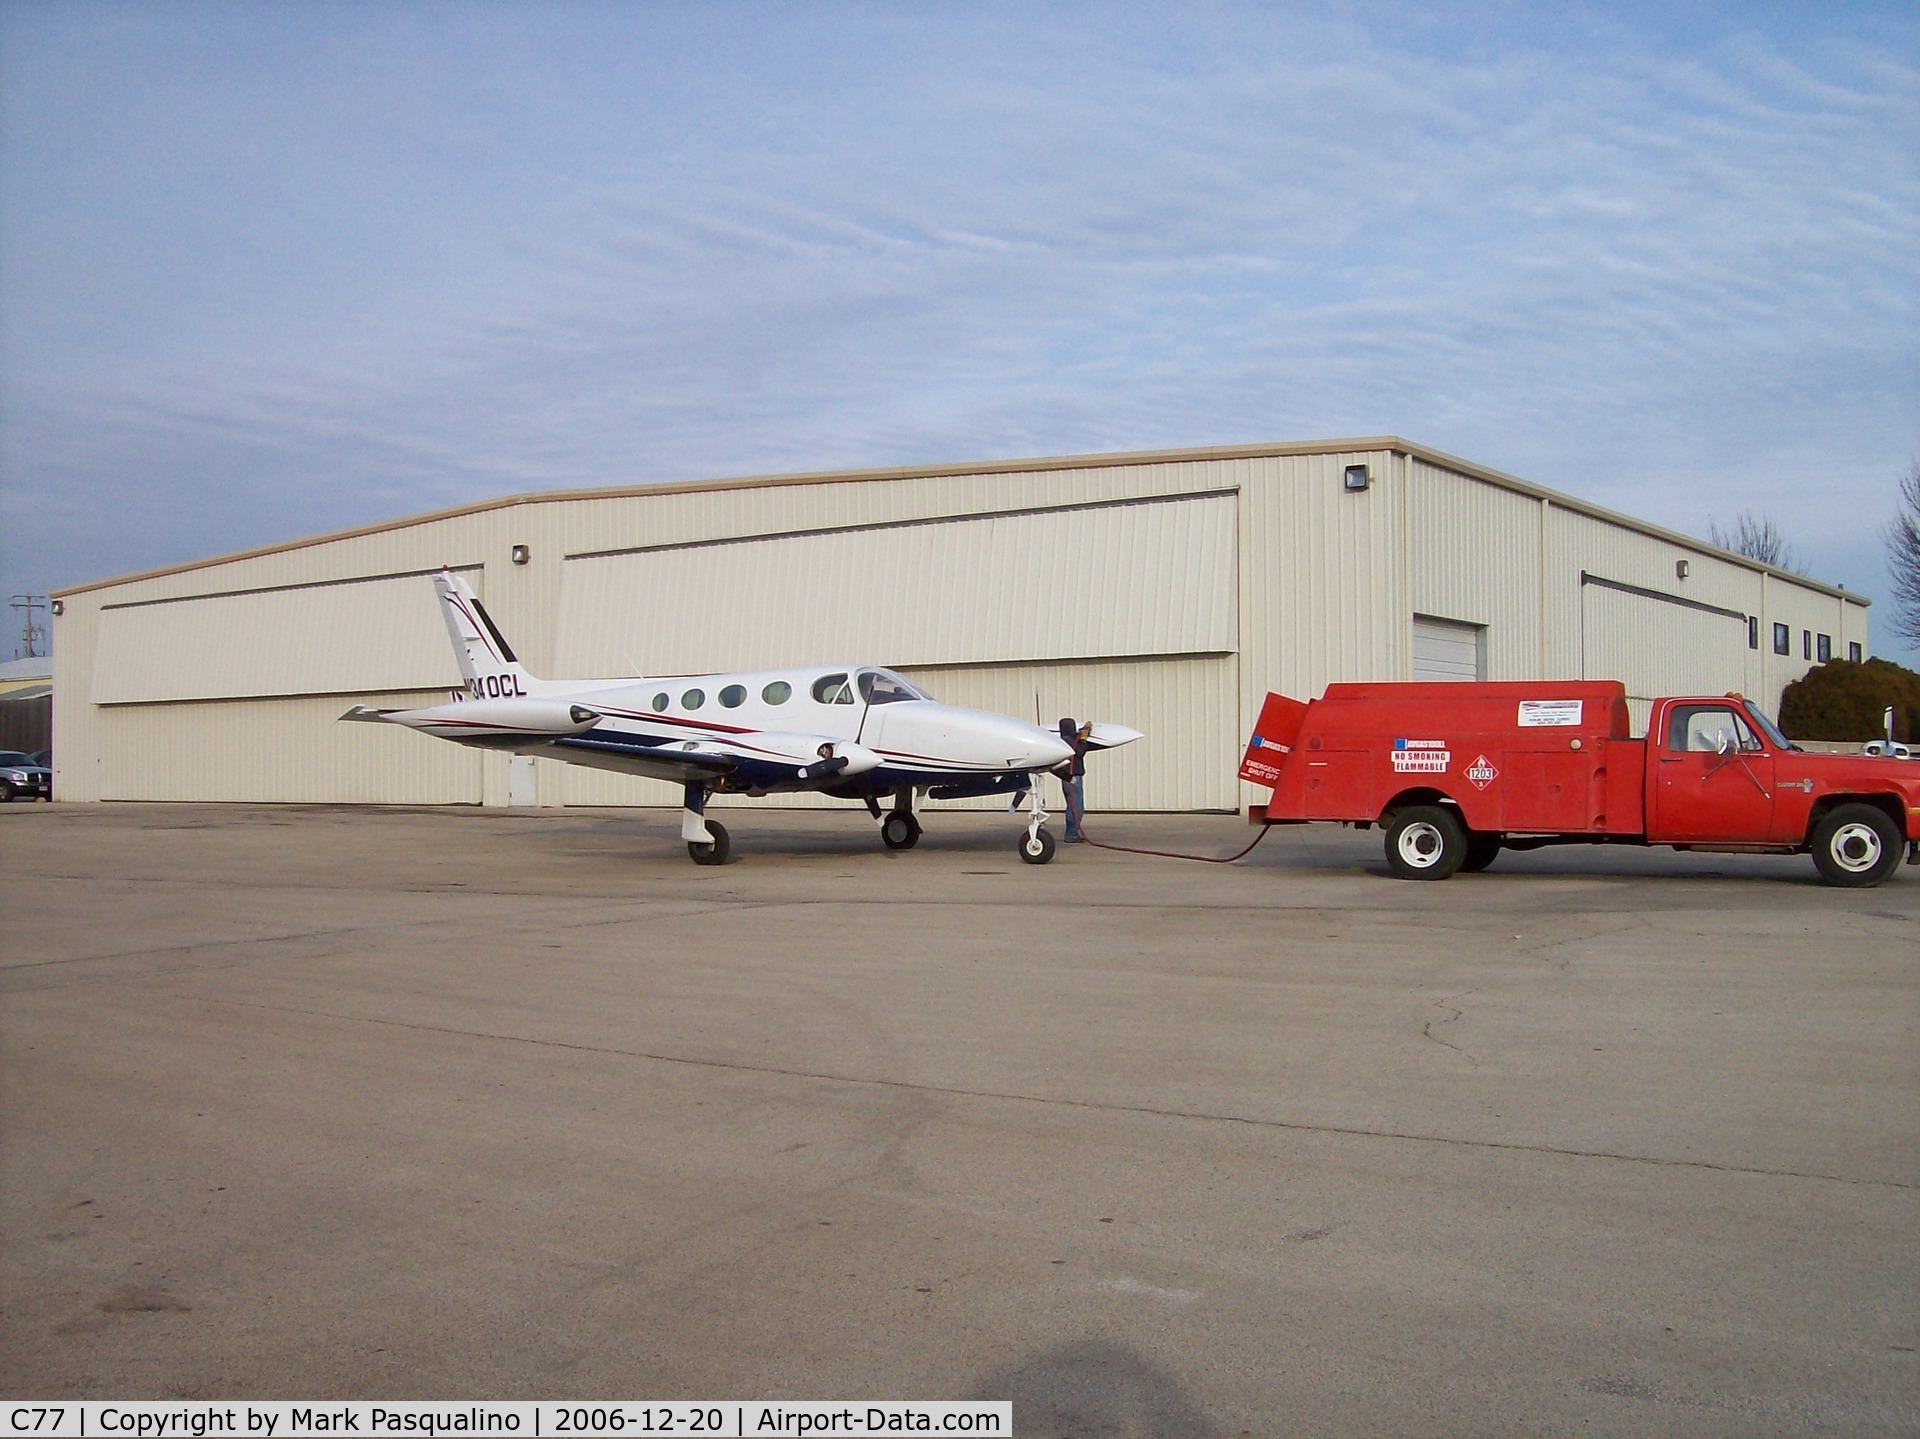 Poplar Grove Airport (C77) - Aircraft maintenance shop